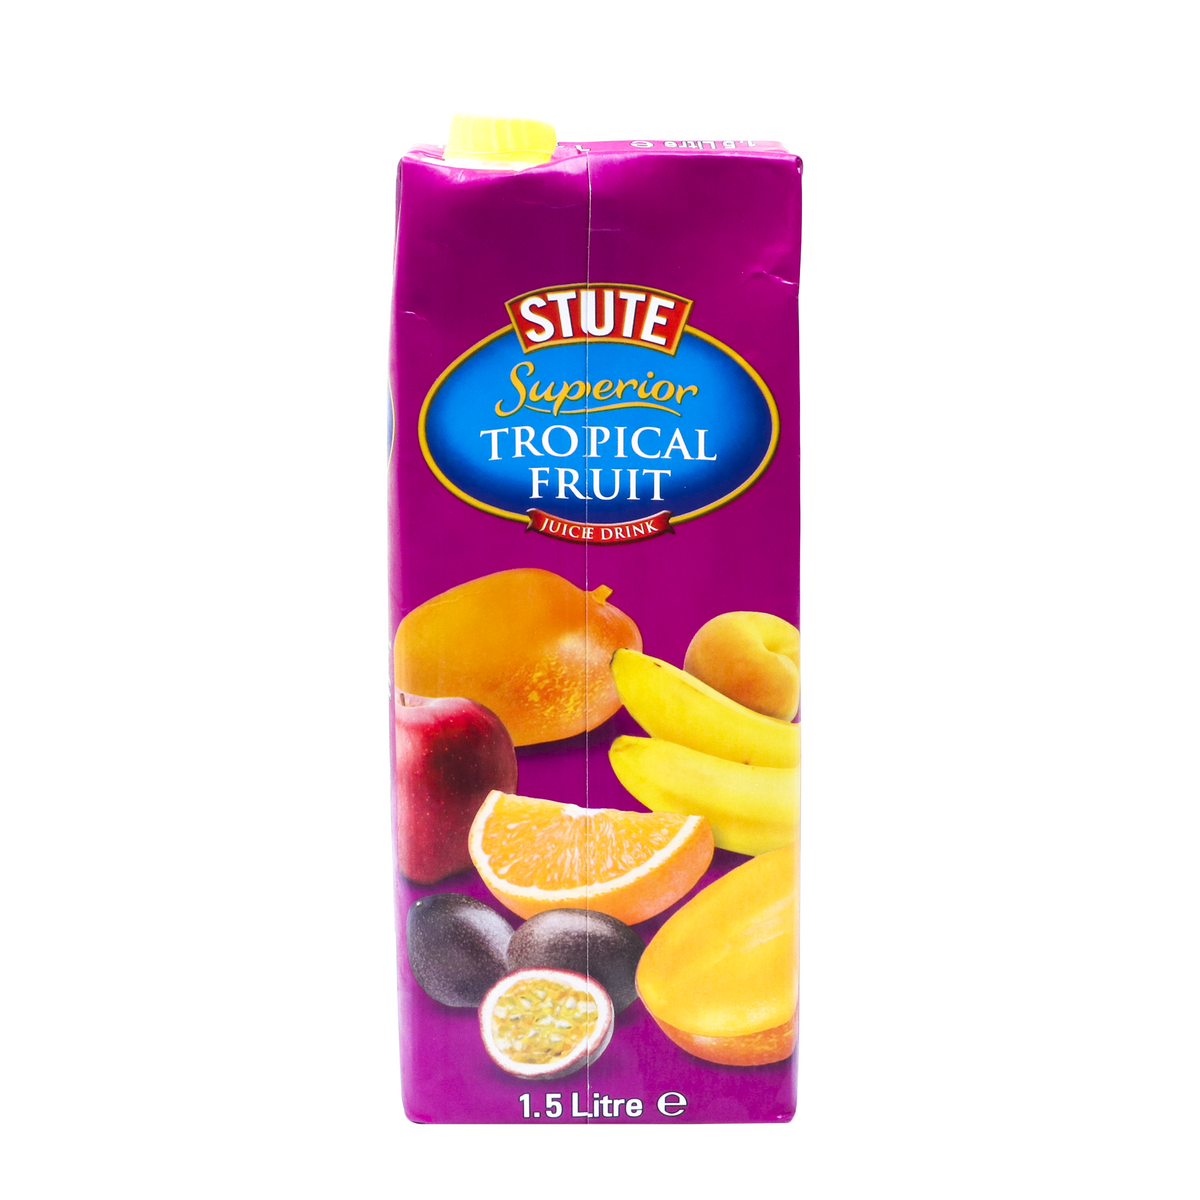 Stute Superior Tropical Fruit Juice 1.5L